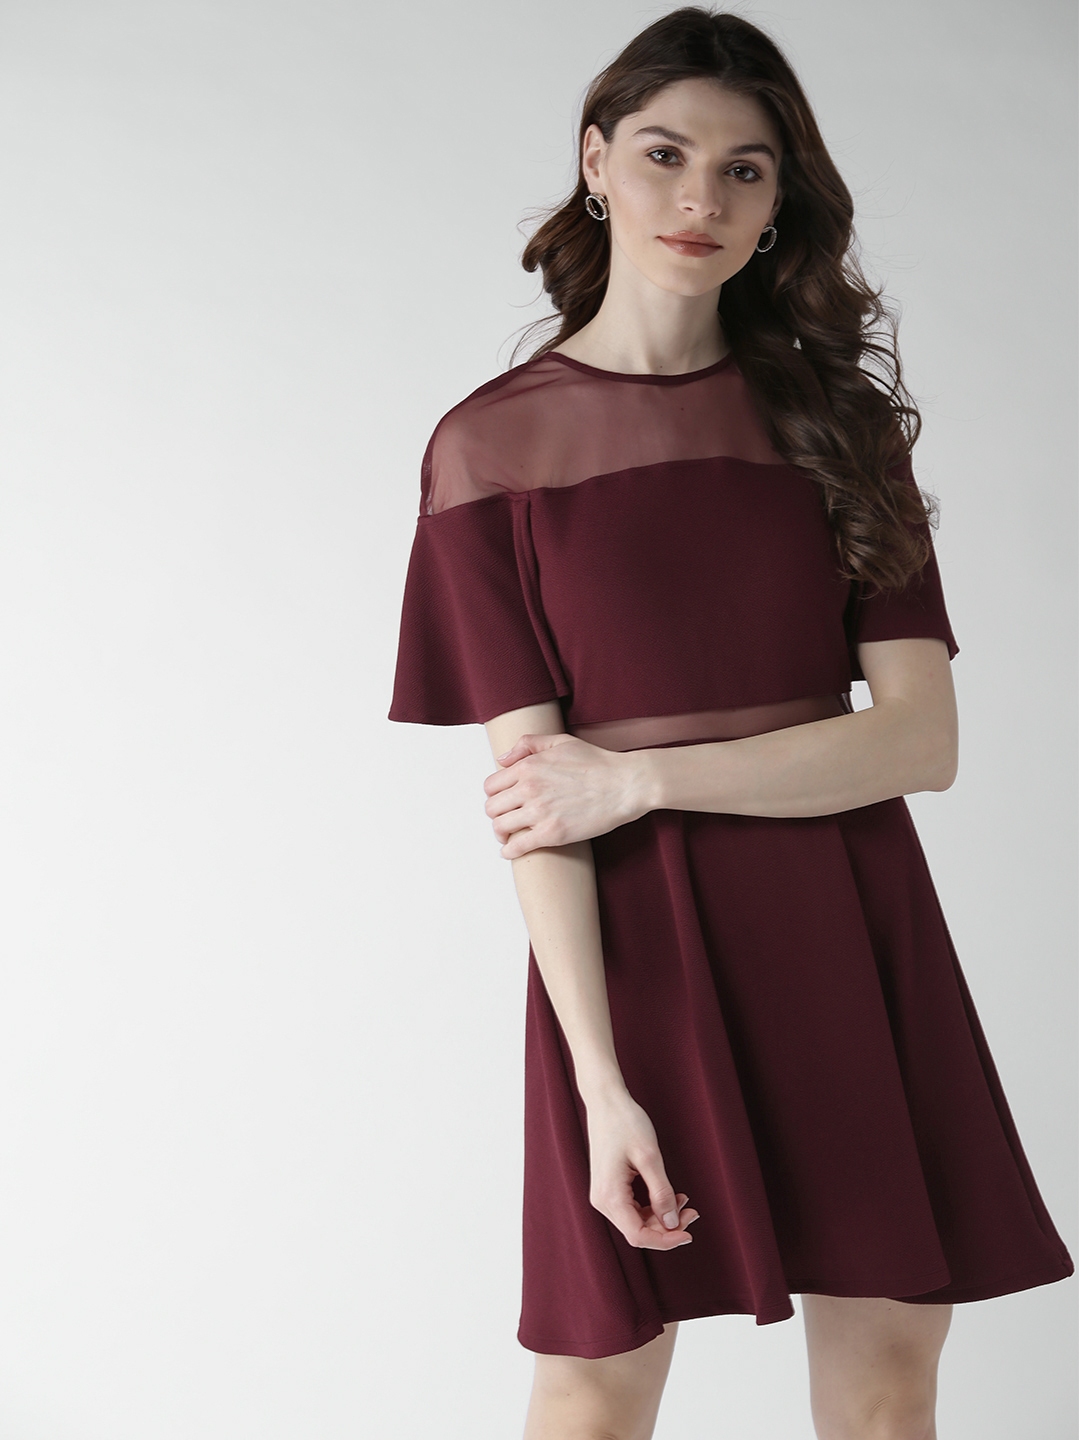 burgundy flare dress